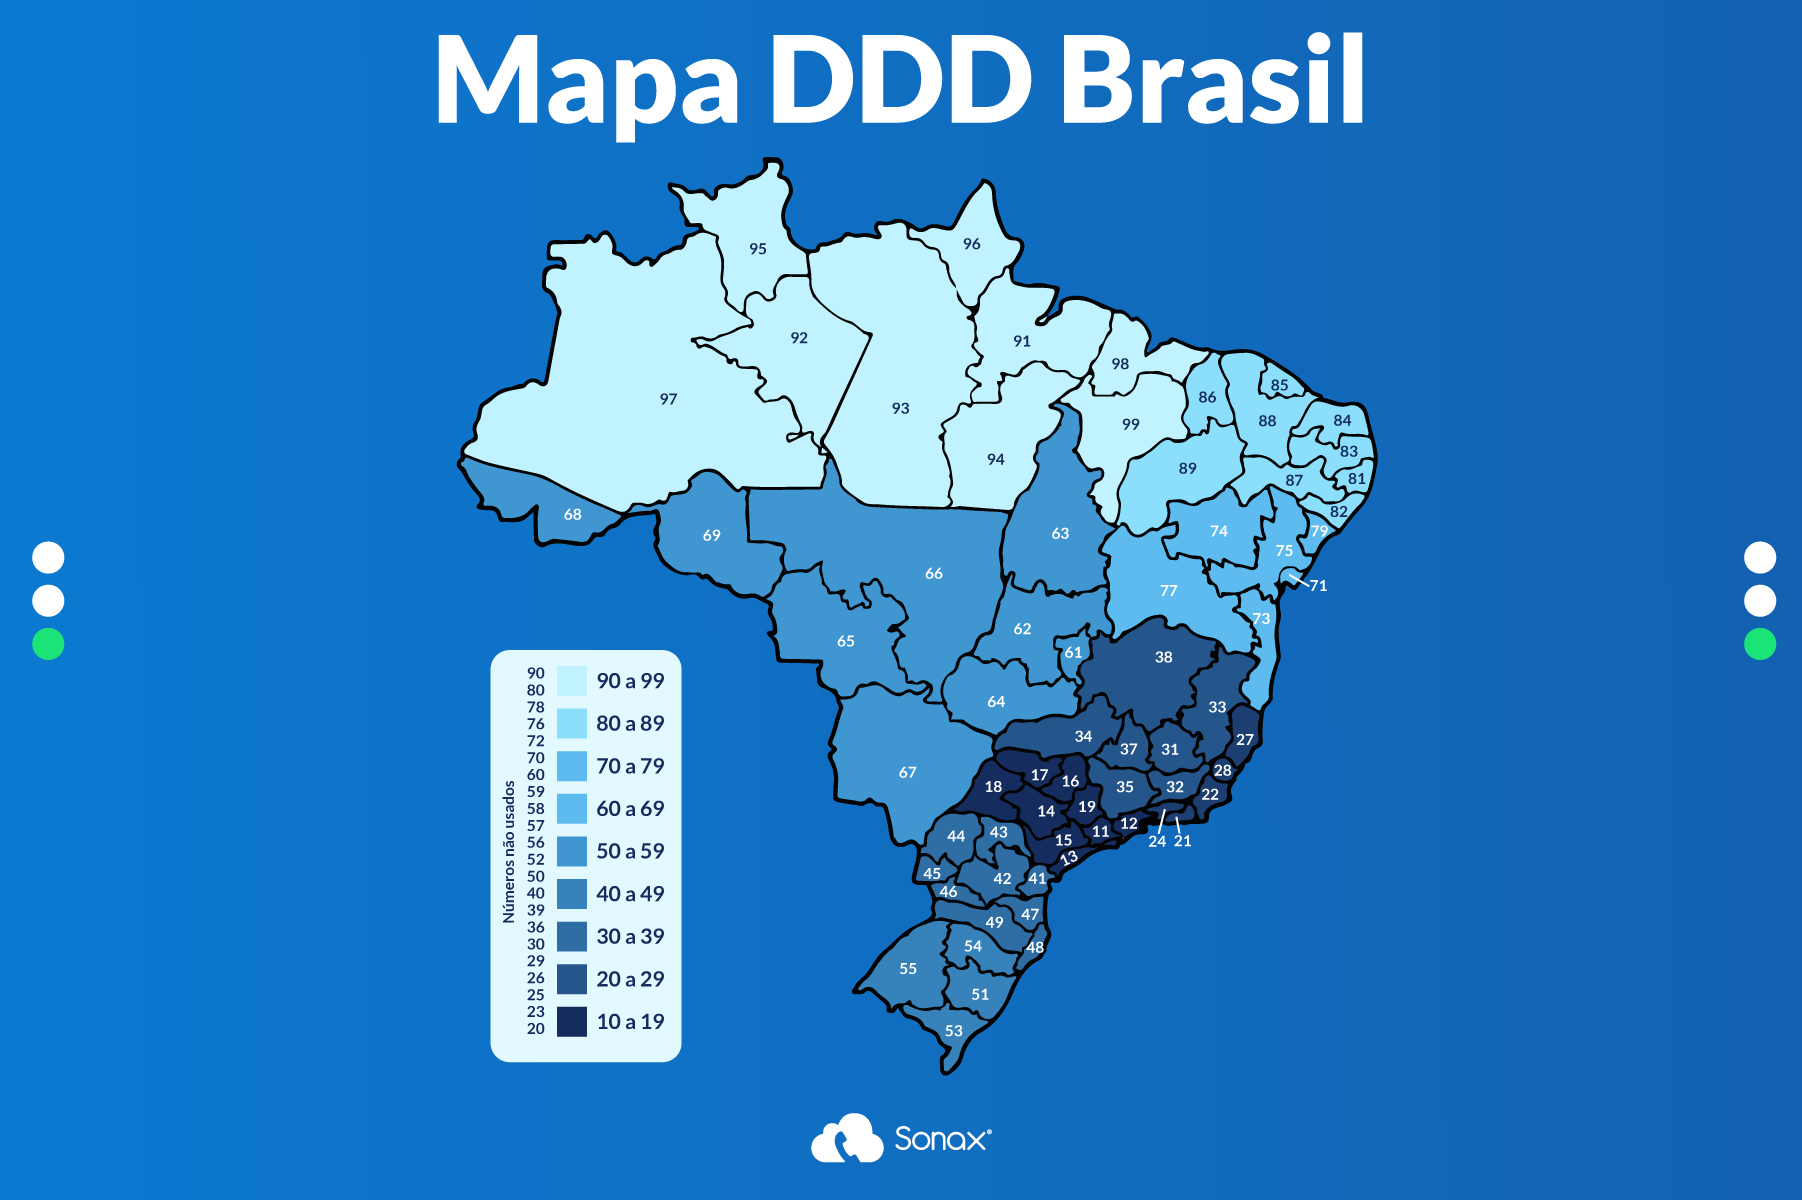 DDD do Brasil: conheça os códigos DDDs dos estados do país!